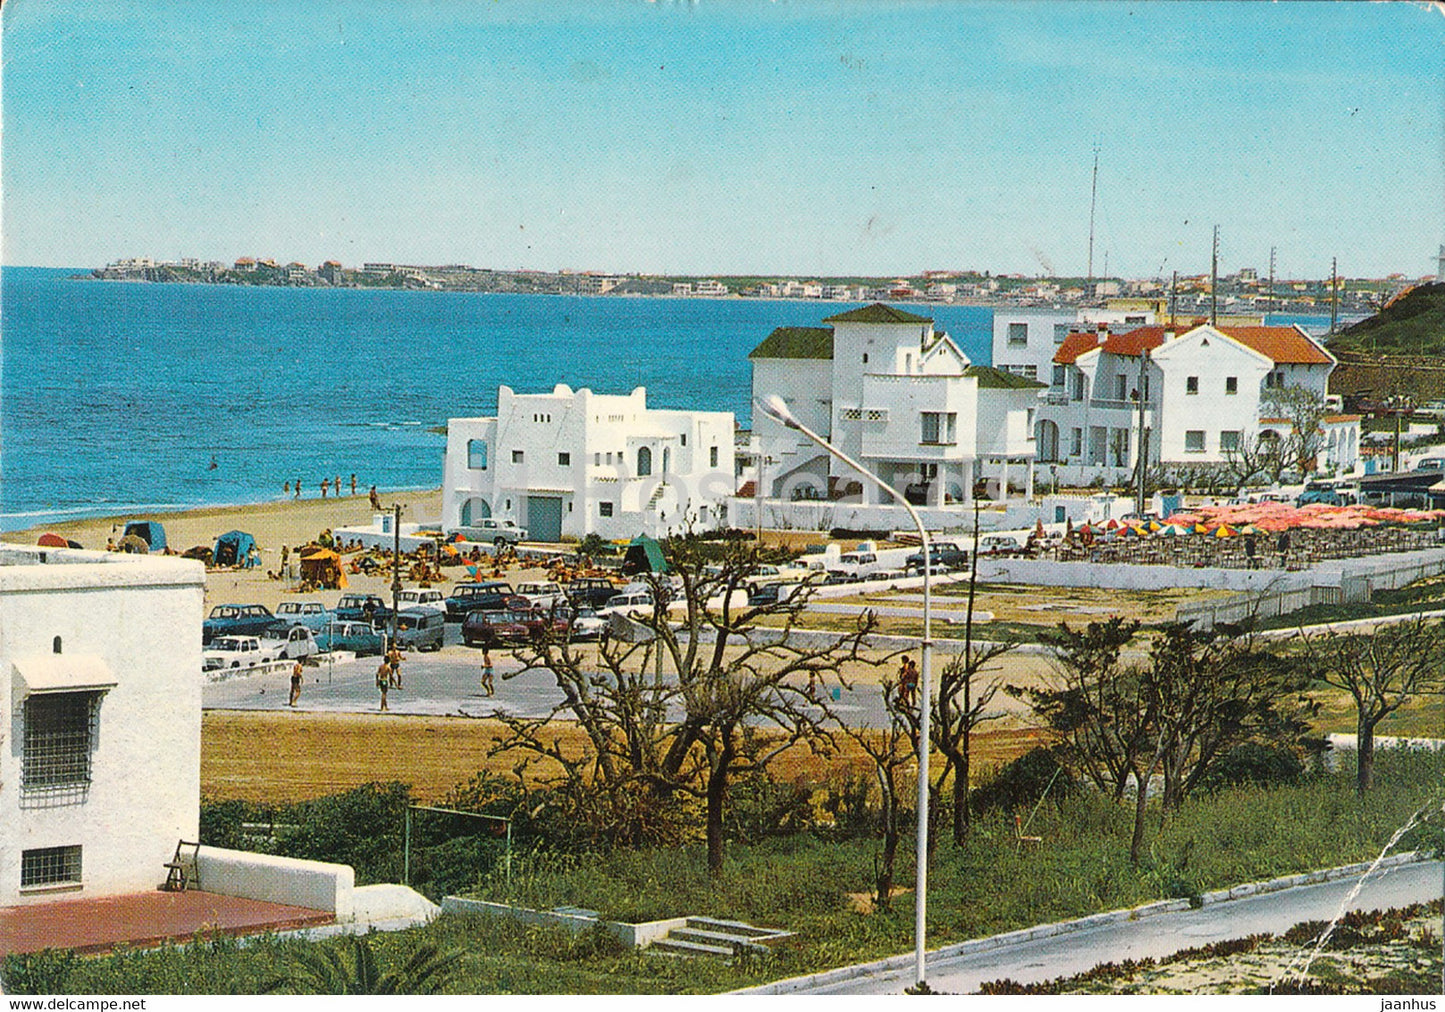 Staoueli - Club des Pins - Pine Trees Club - 1984 - Algeria - used - JH Postcards